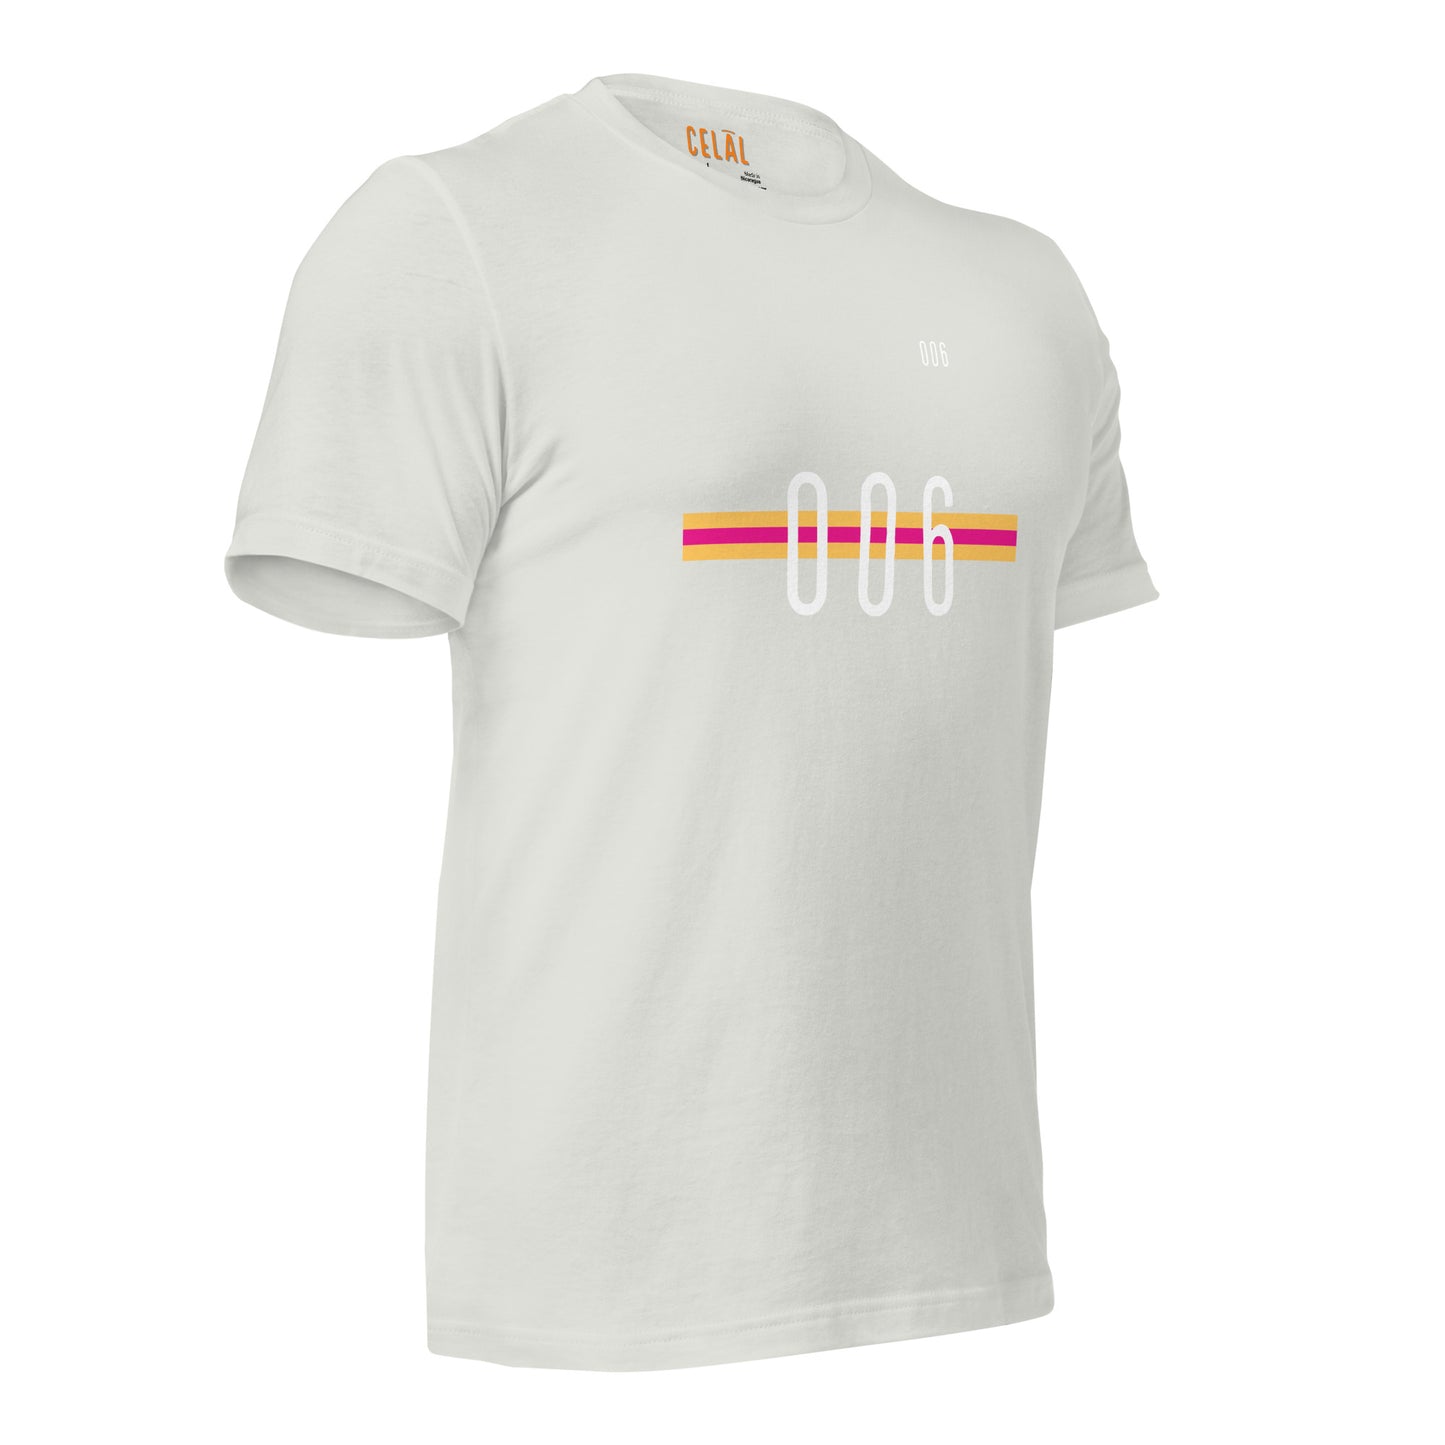 006 Unisex t-shirt